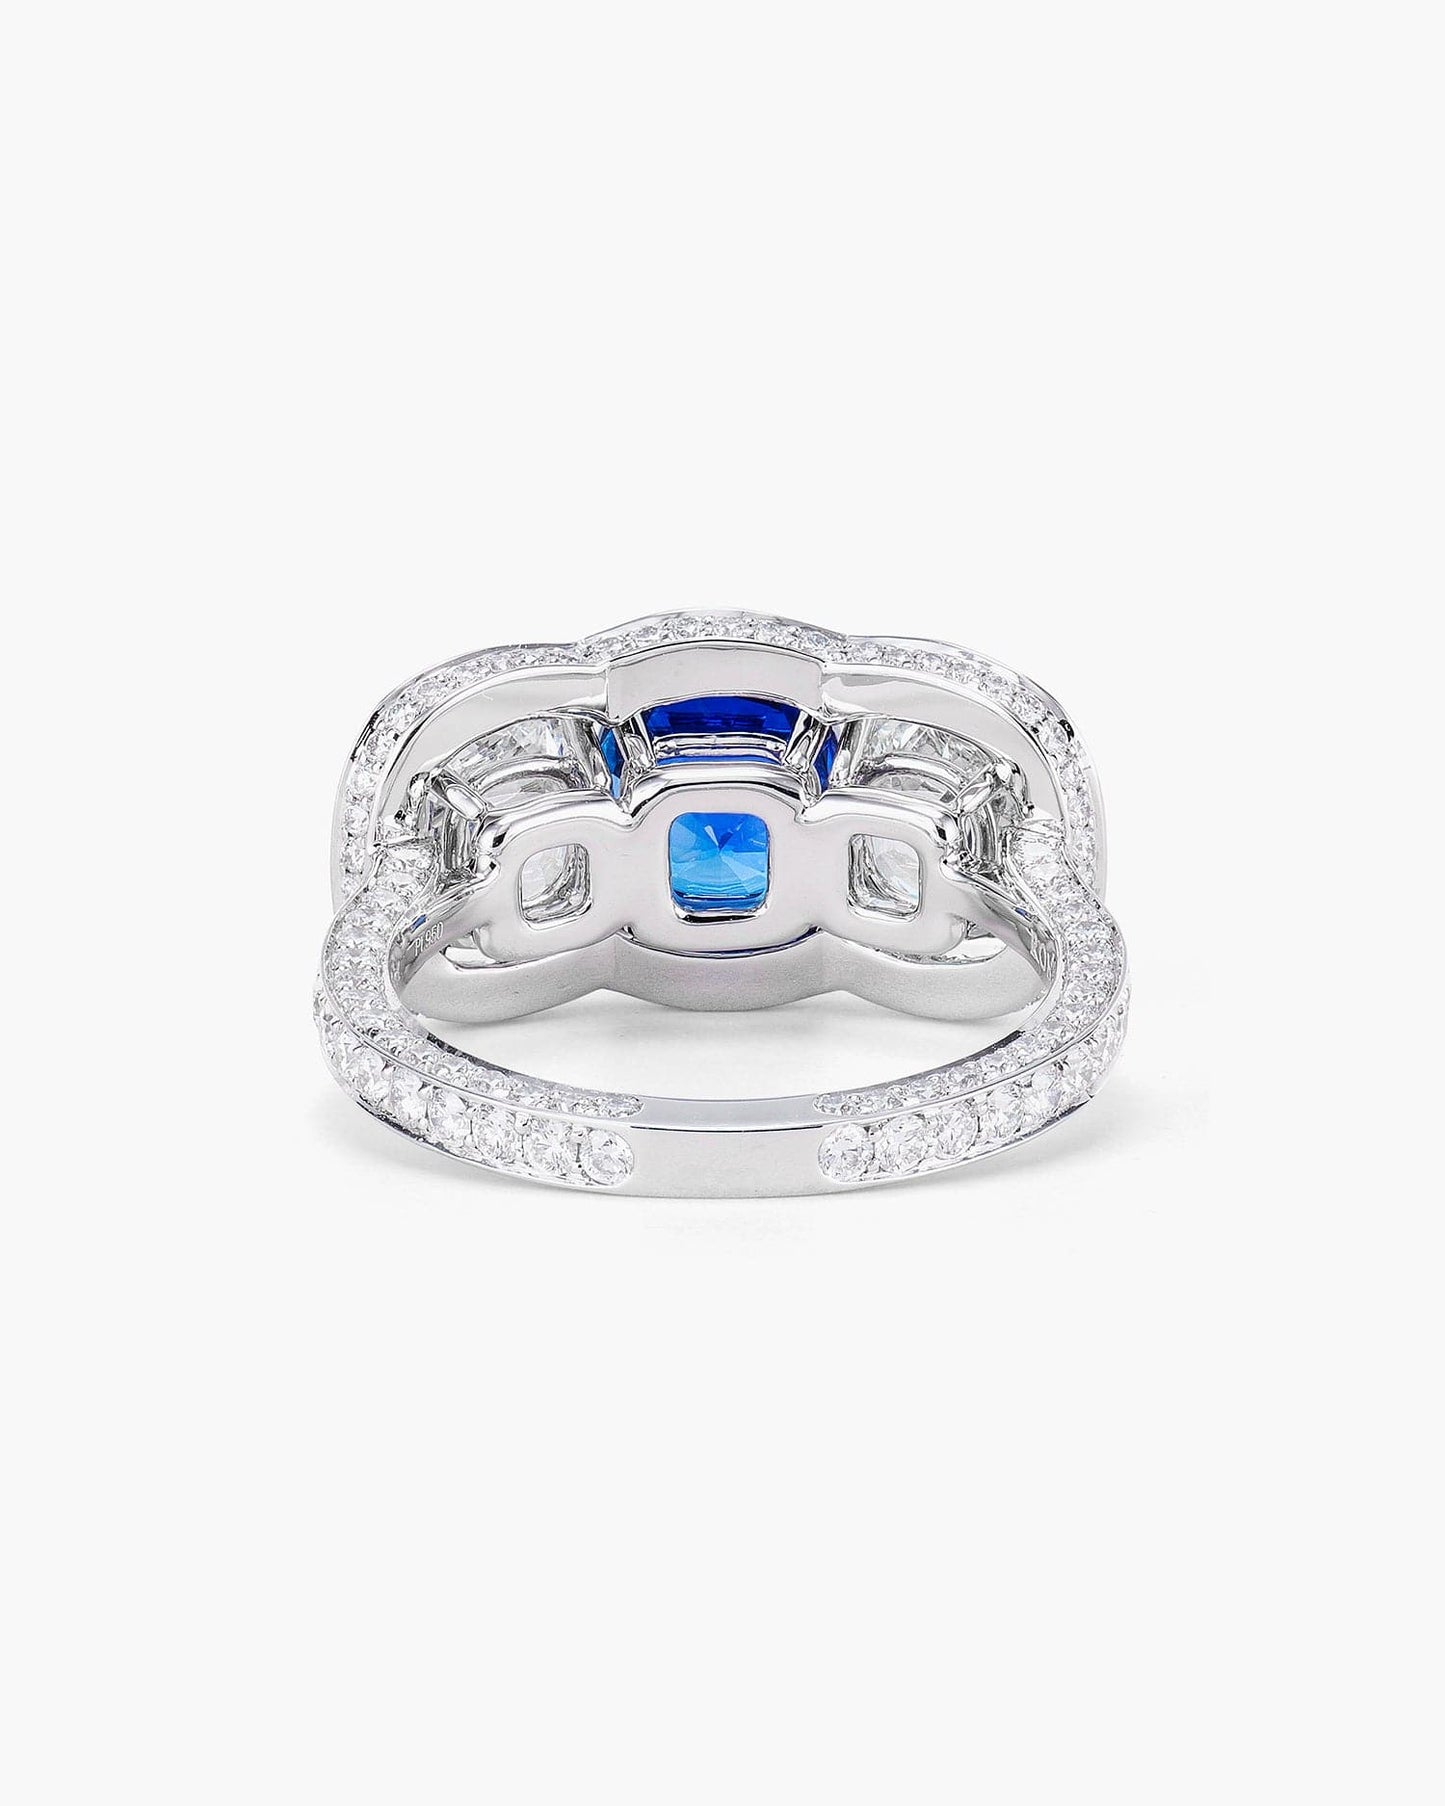 1.82 carat Cushion Cut Ceylon Sapphire and Diamond Ring